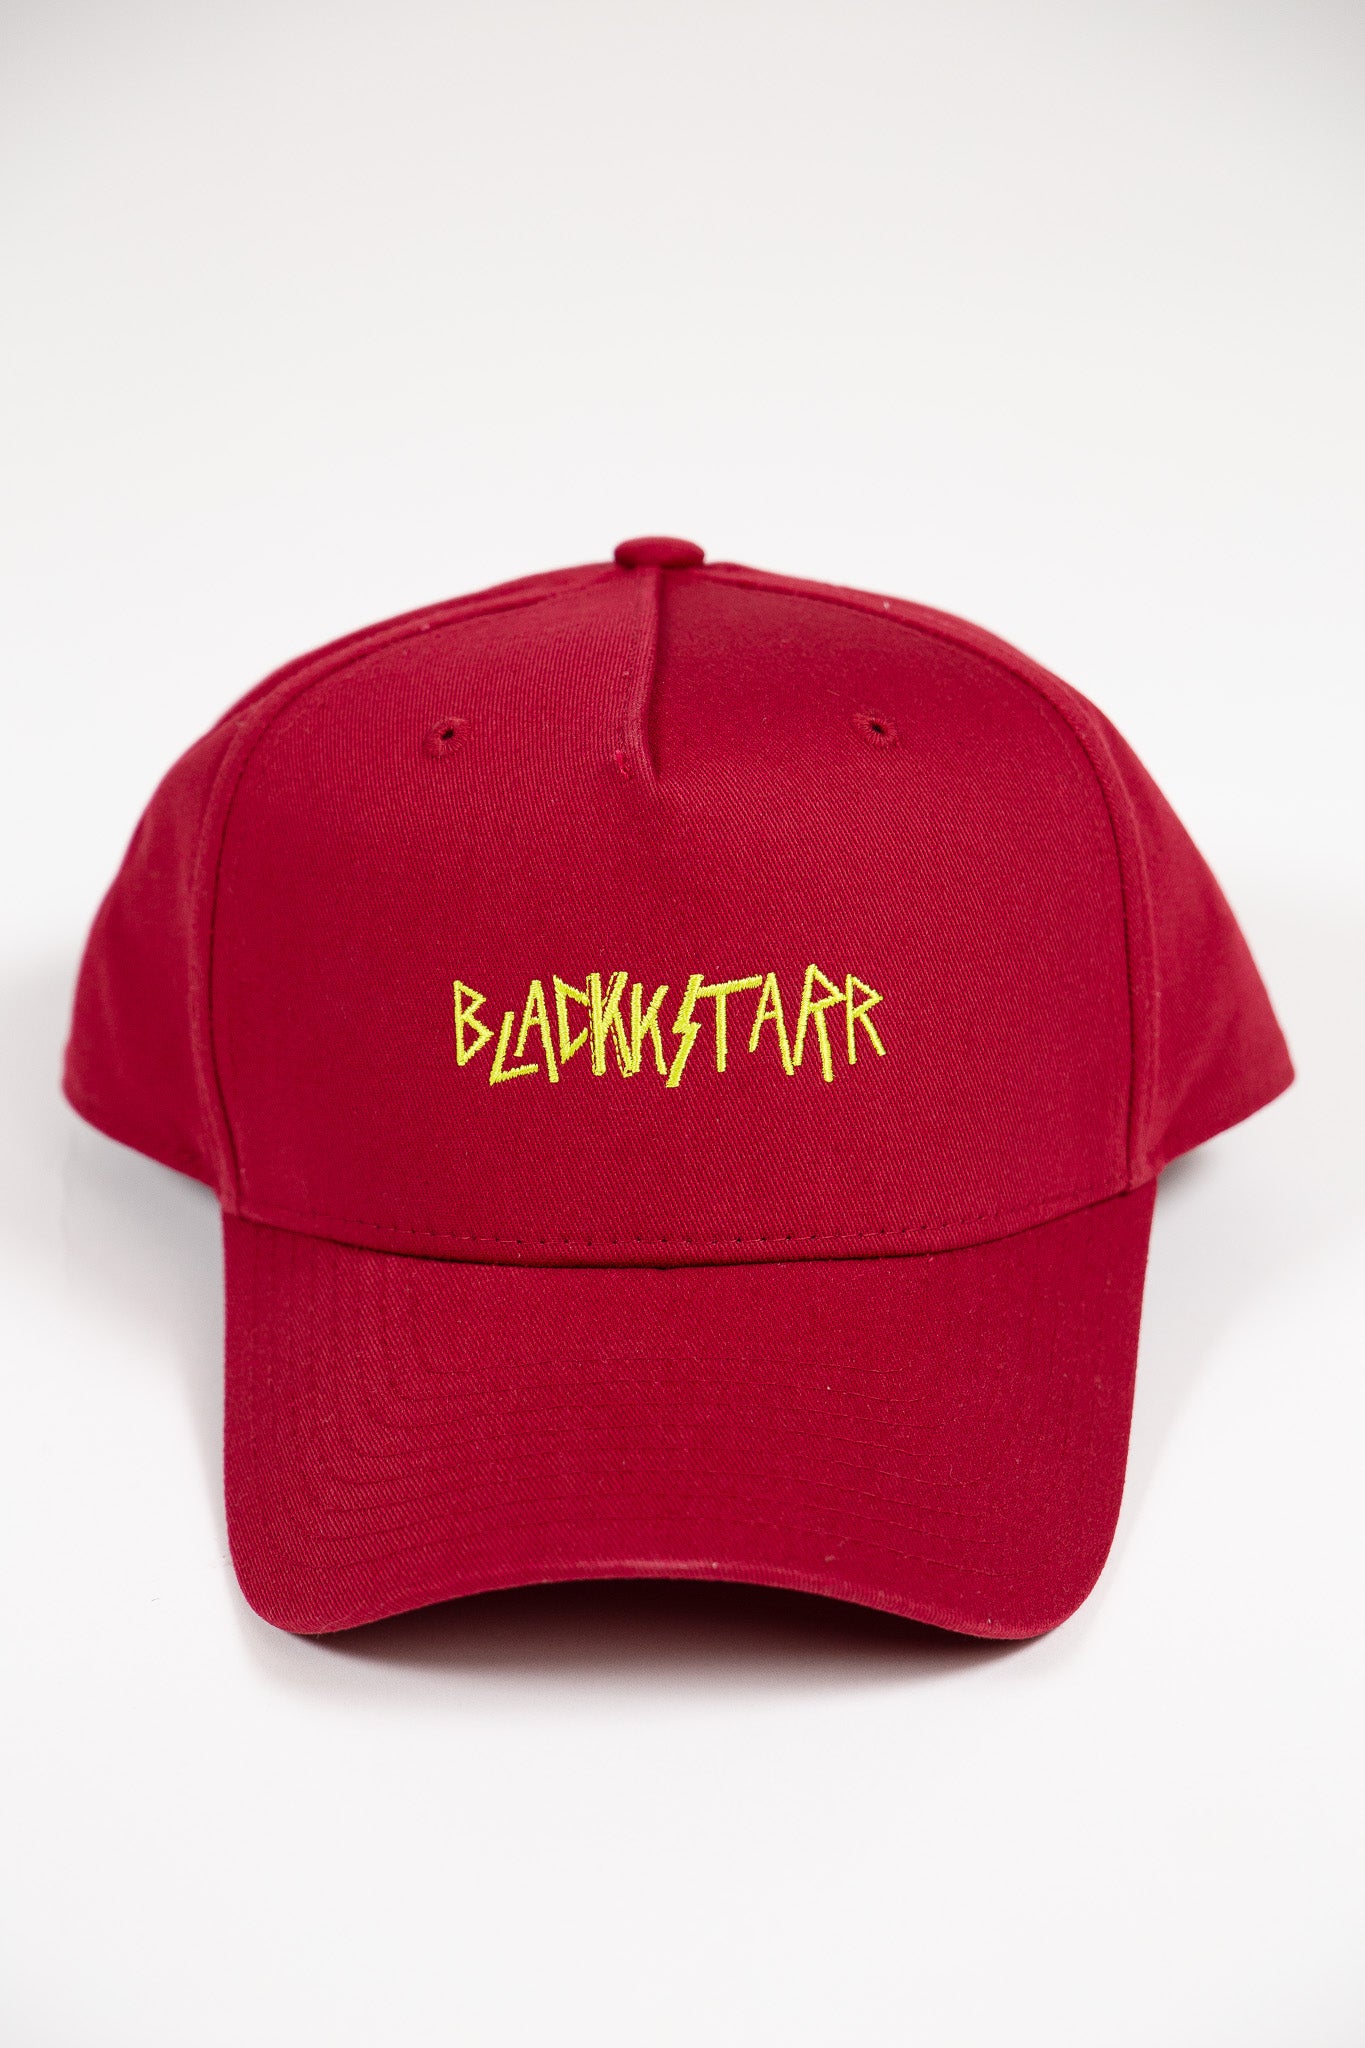 "BLACKKSTARR" Embroided Snapback - Redd